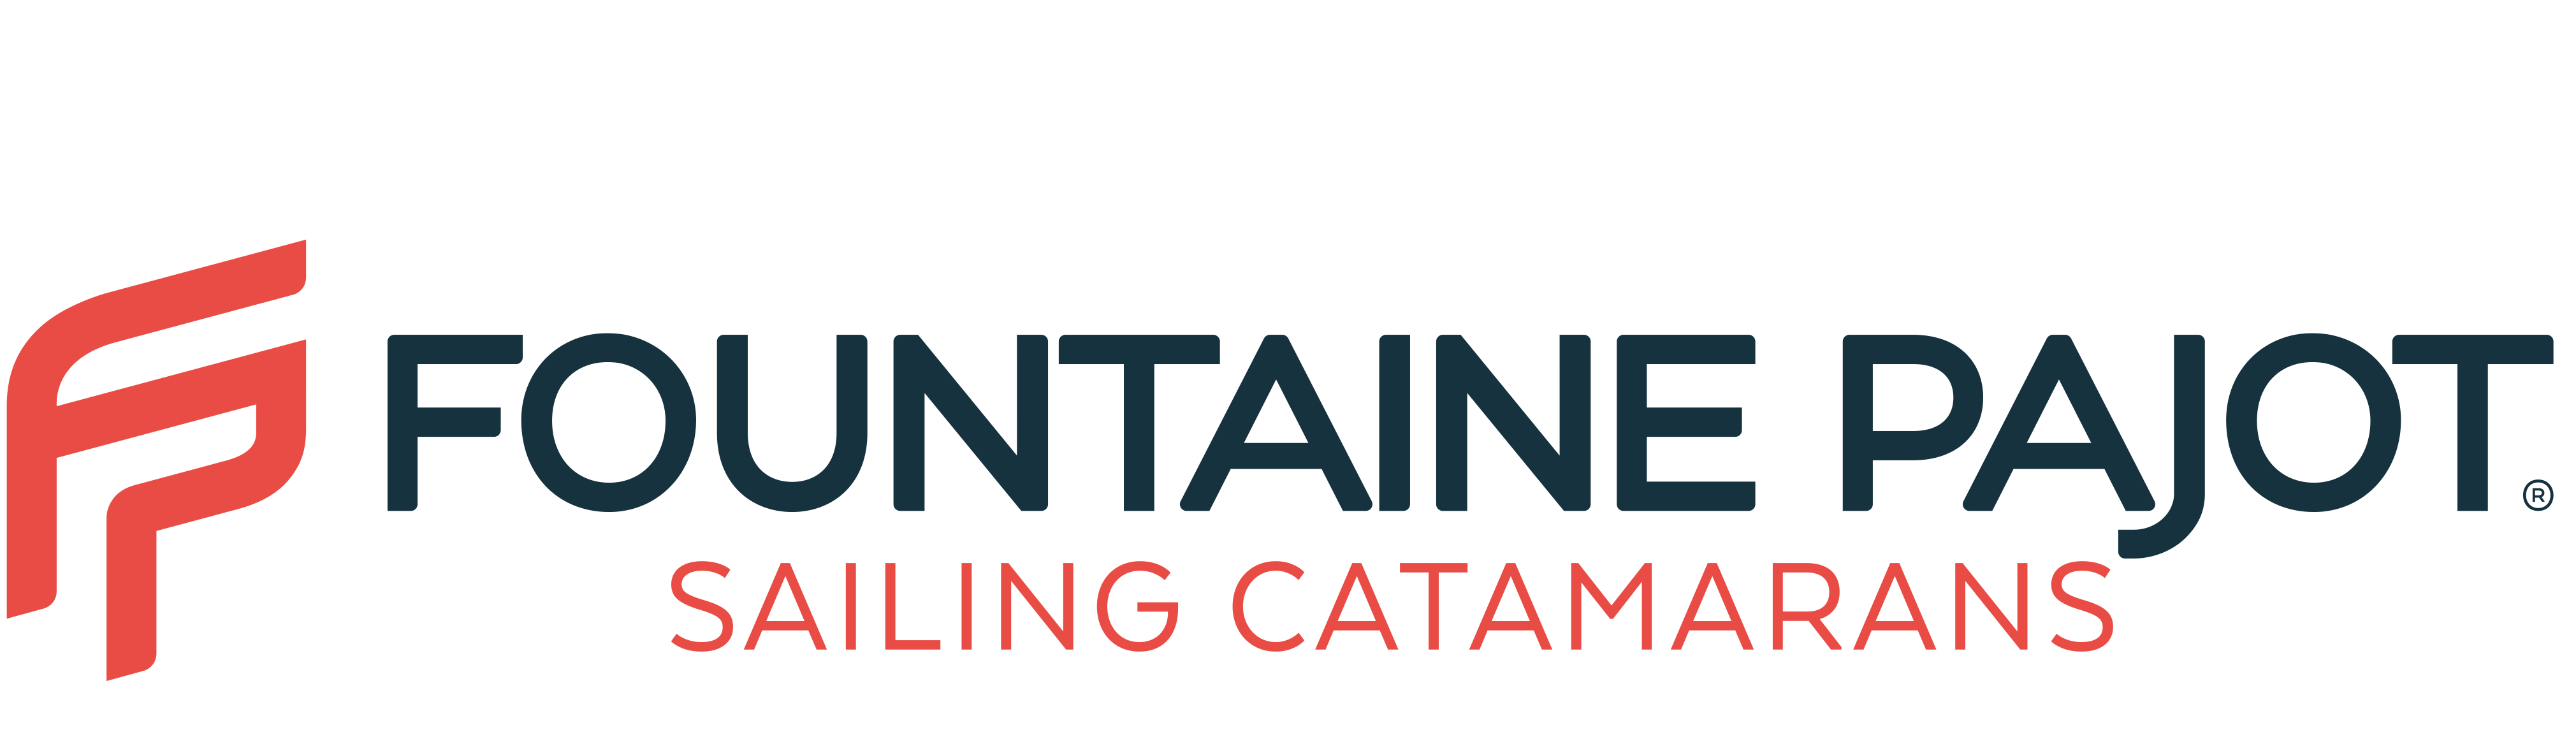 Fountaine Pajot Catamarans logo